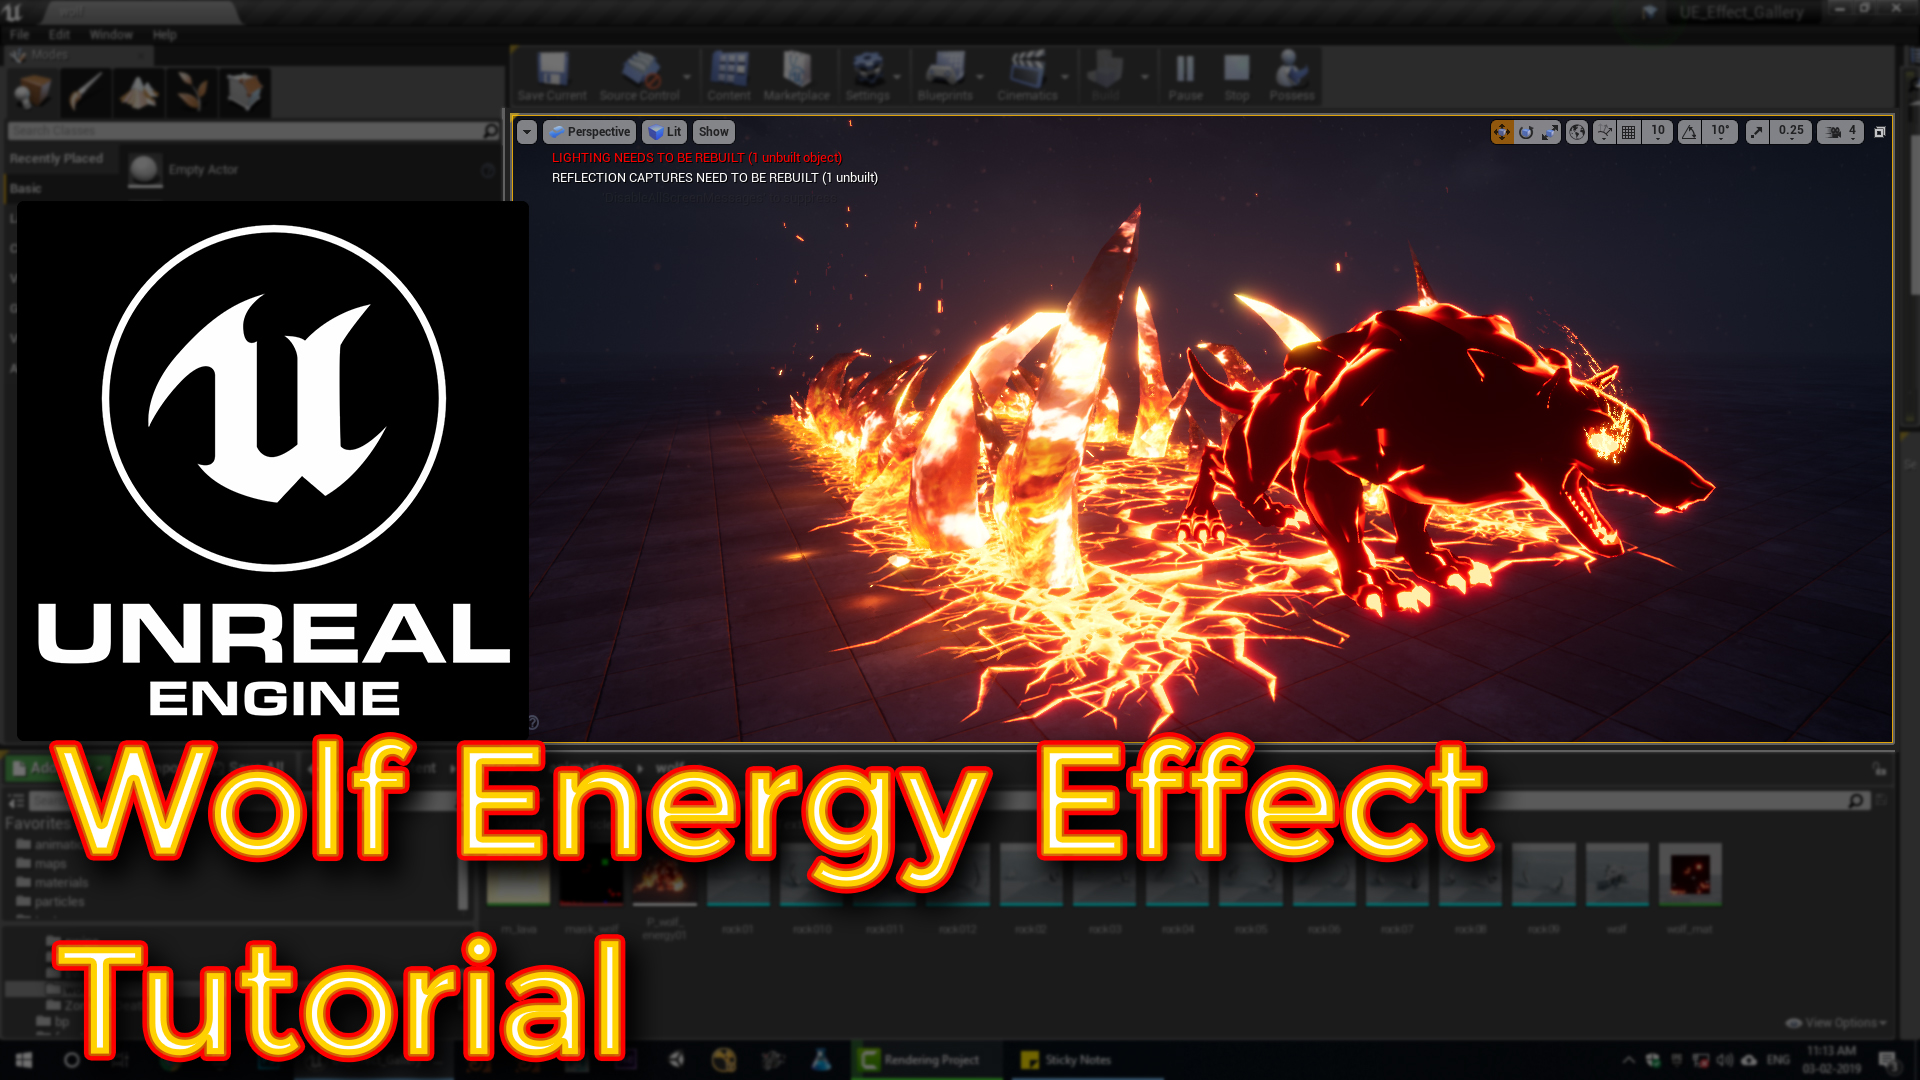 Unreal Engine Wolf Energy Effect tutorial